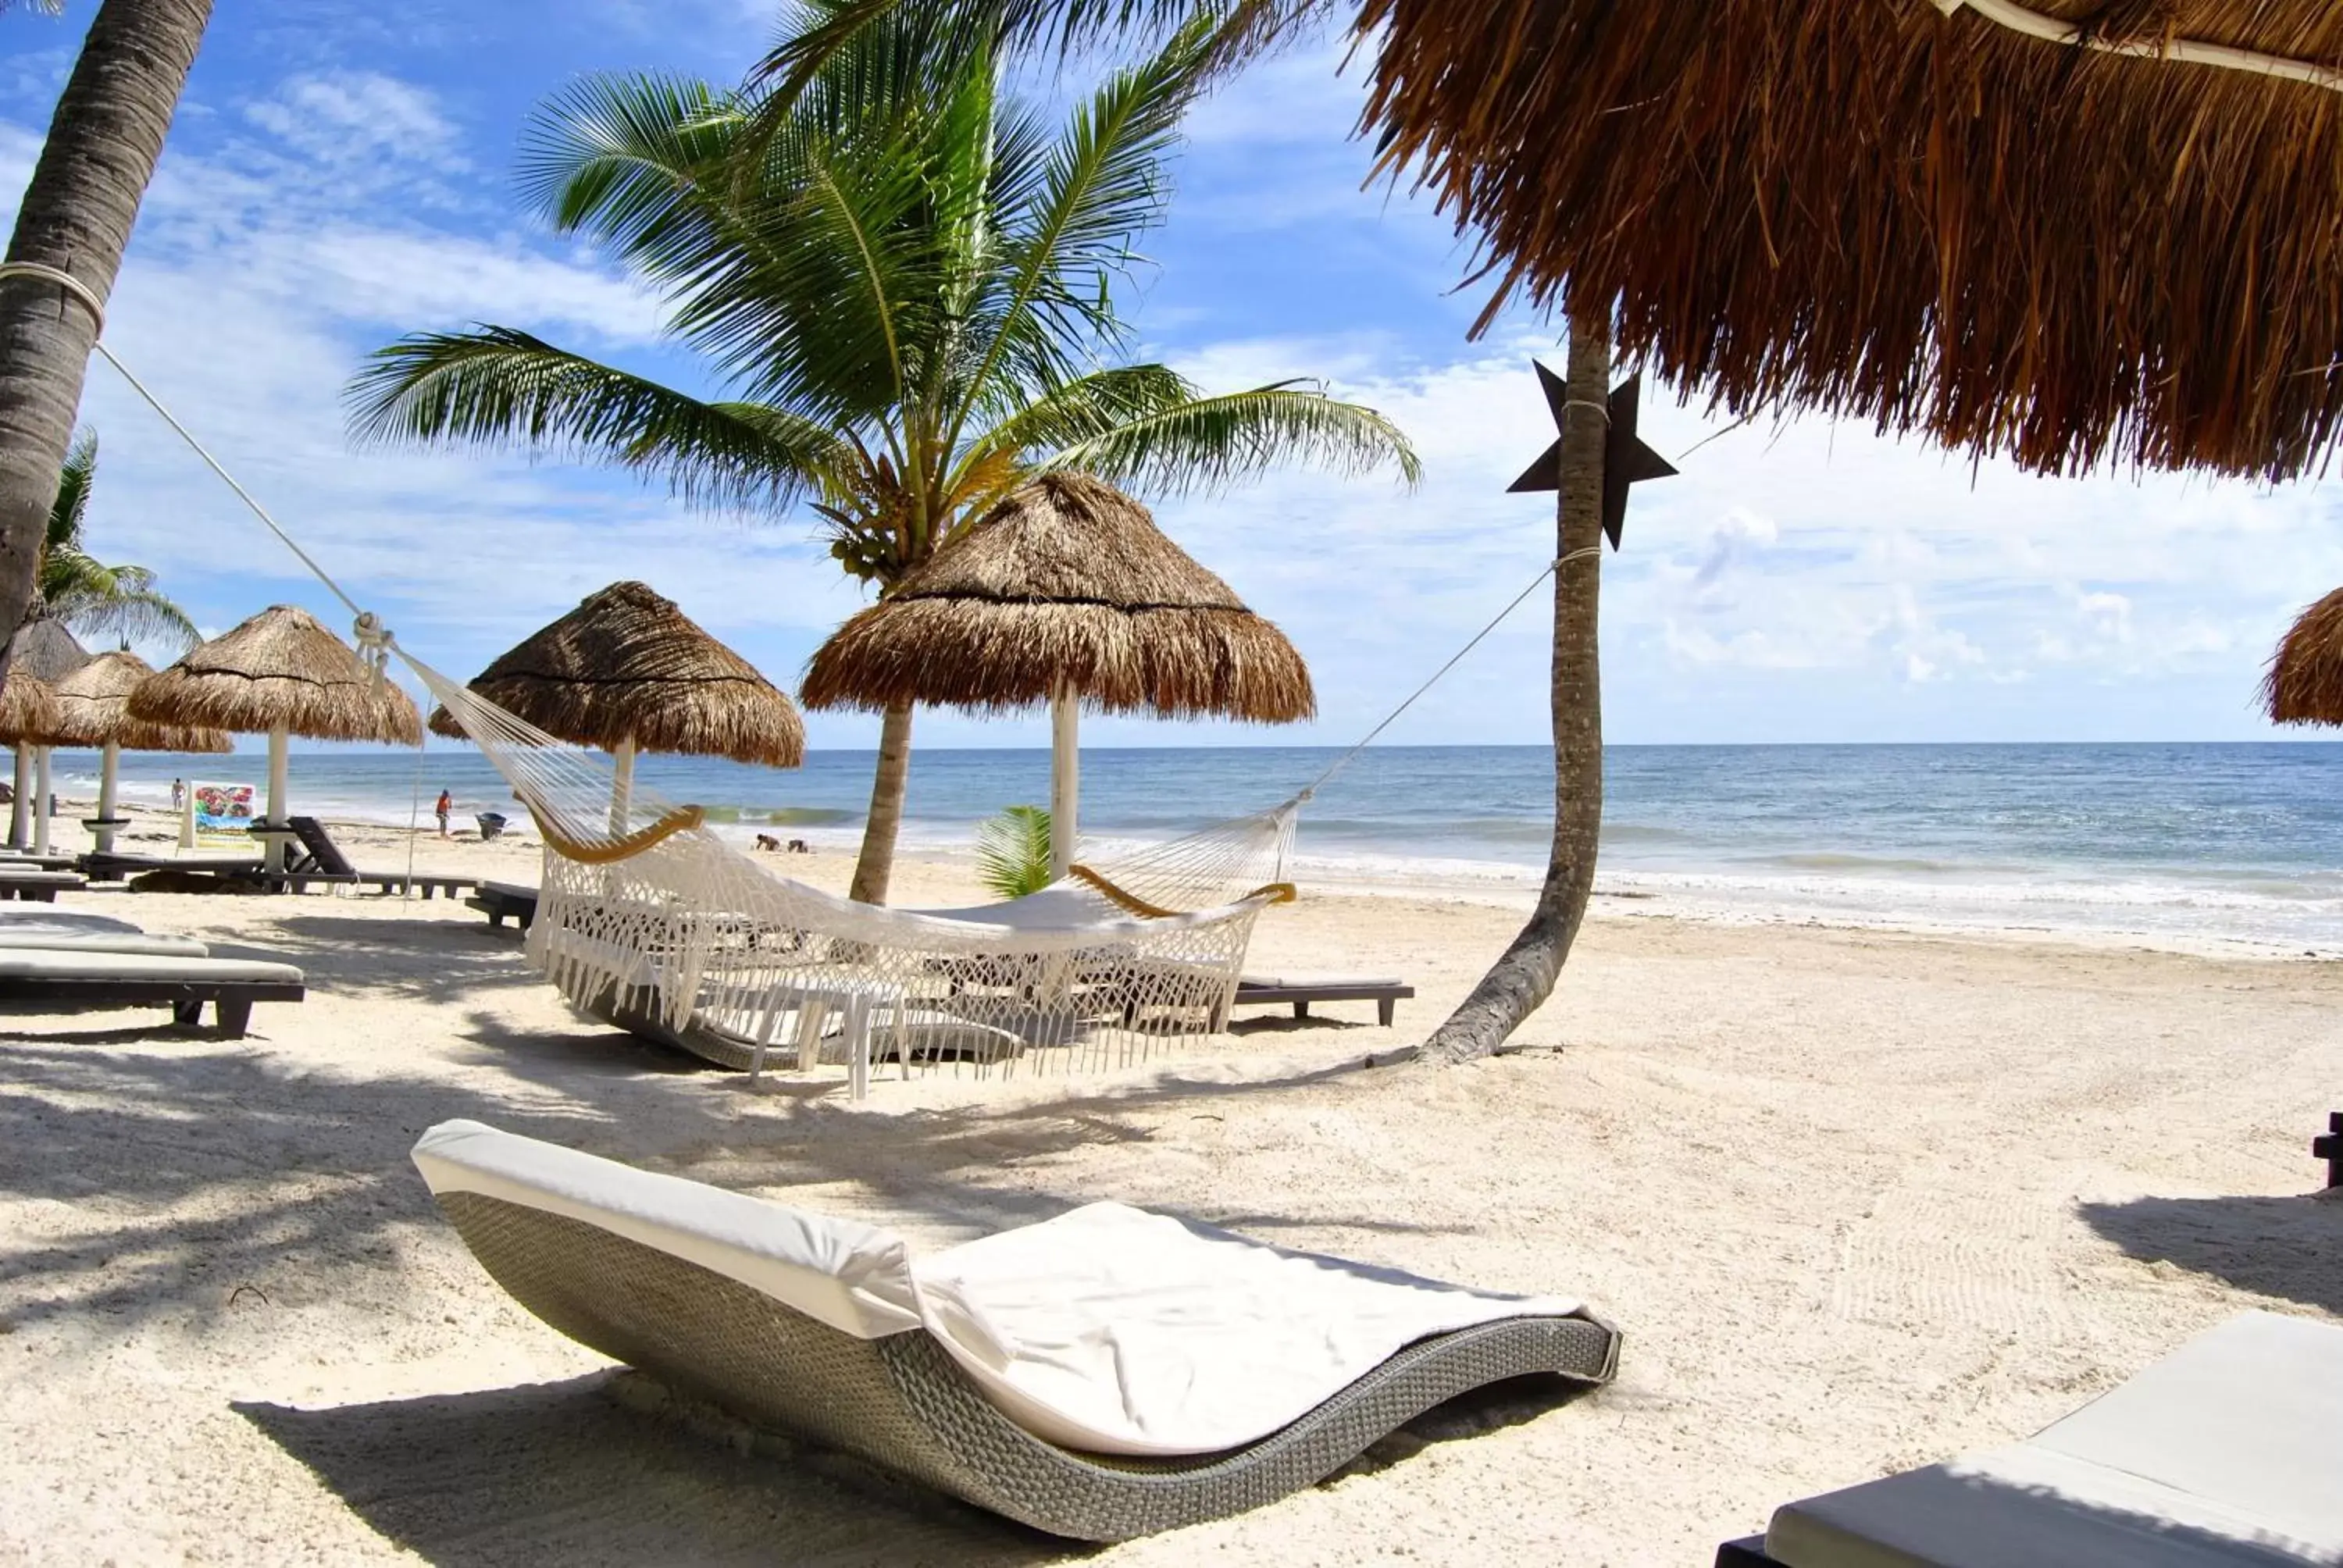 Off site, Beach in Villa Las Estrellas Tulum - located at the party zone